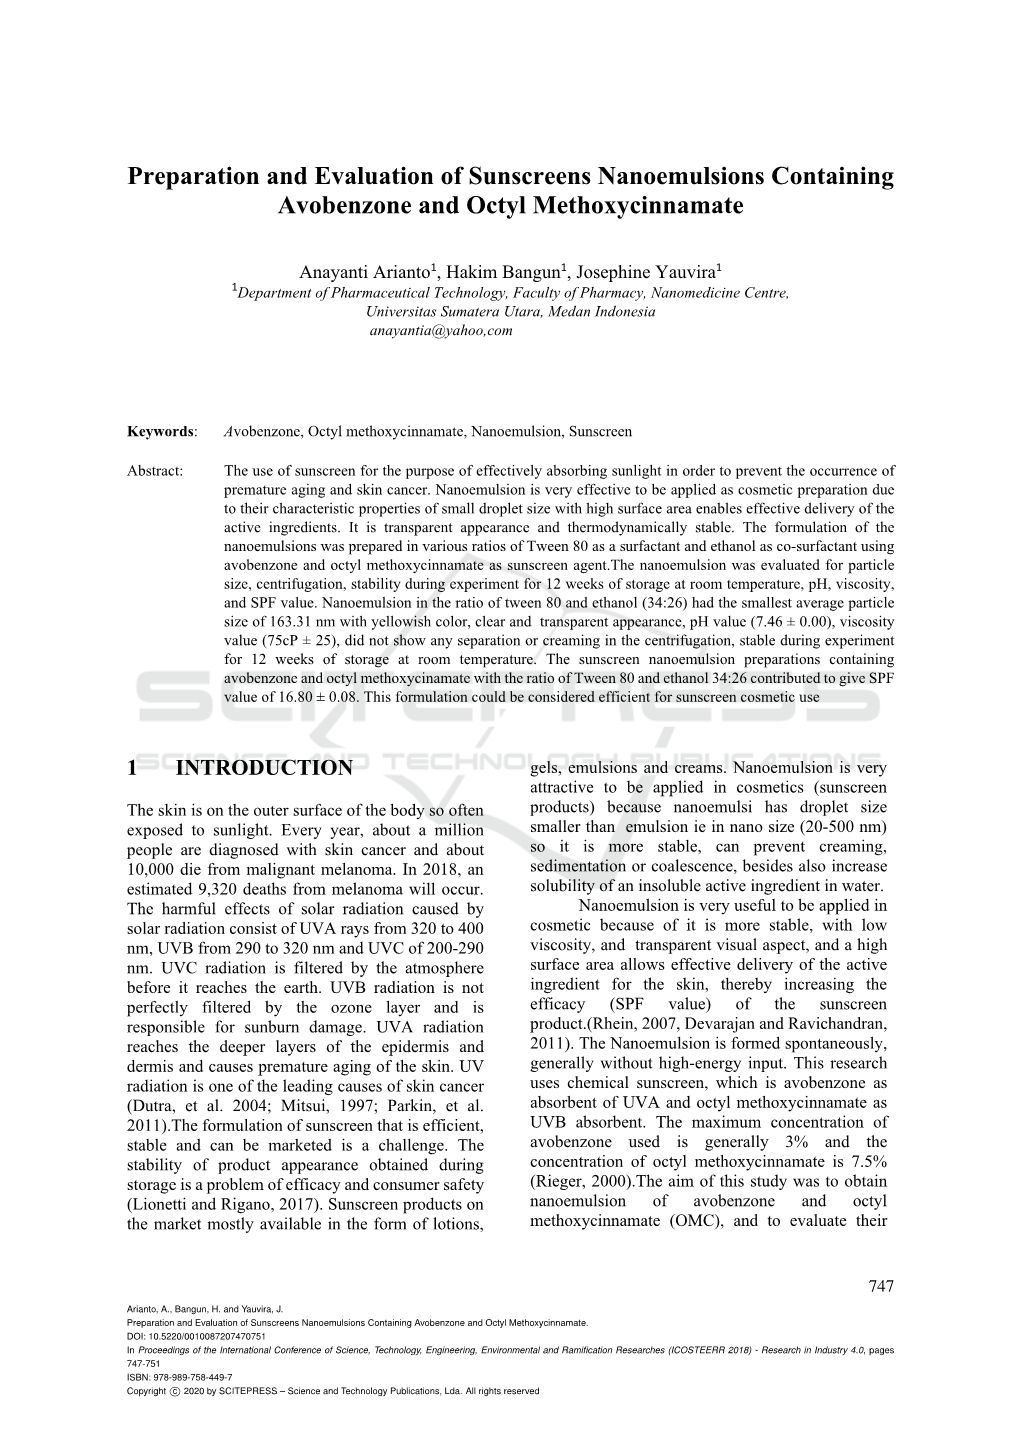 Preparation and Evaluation of Sunscreens Nanoemulsions Containing Avobenzone and Octyl Methoxycinnamate